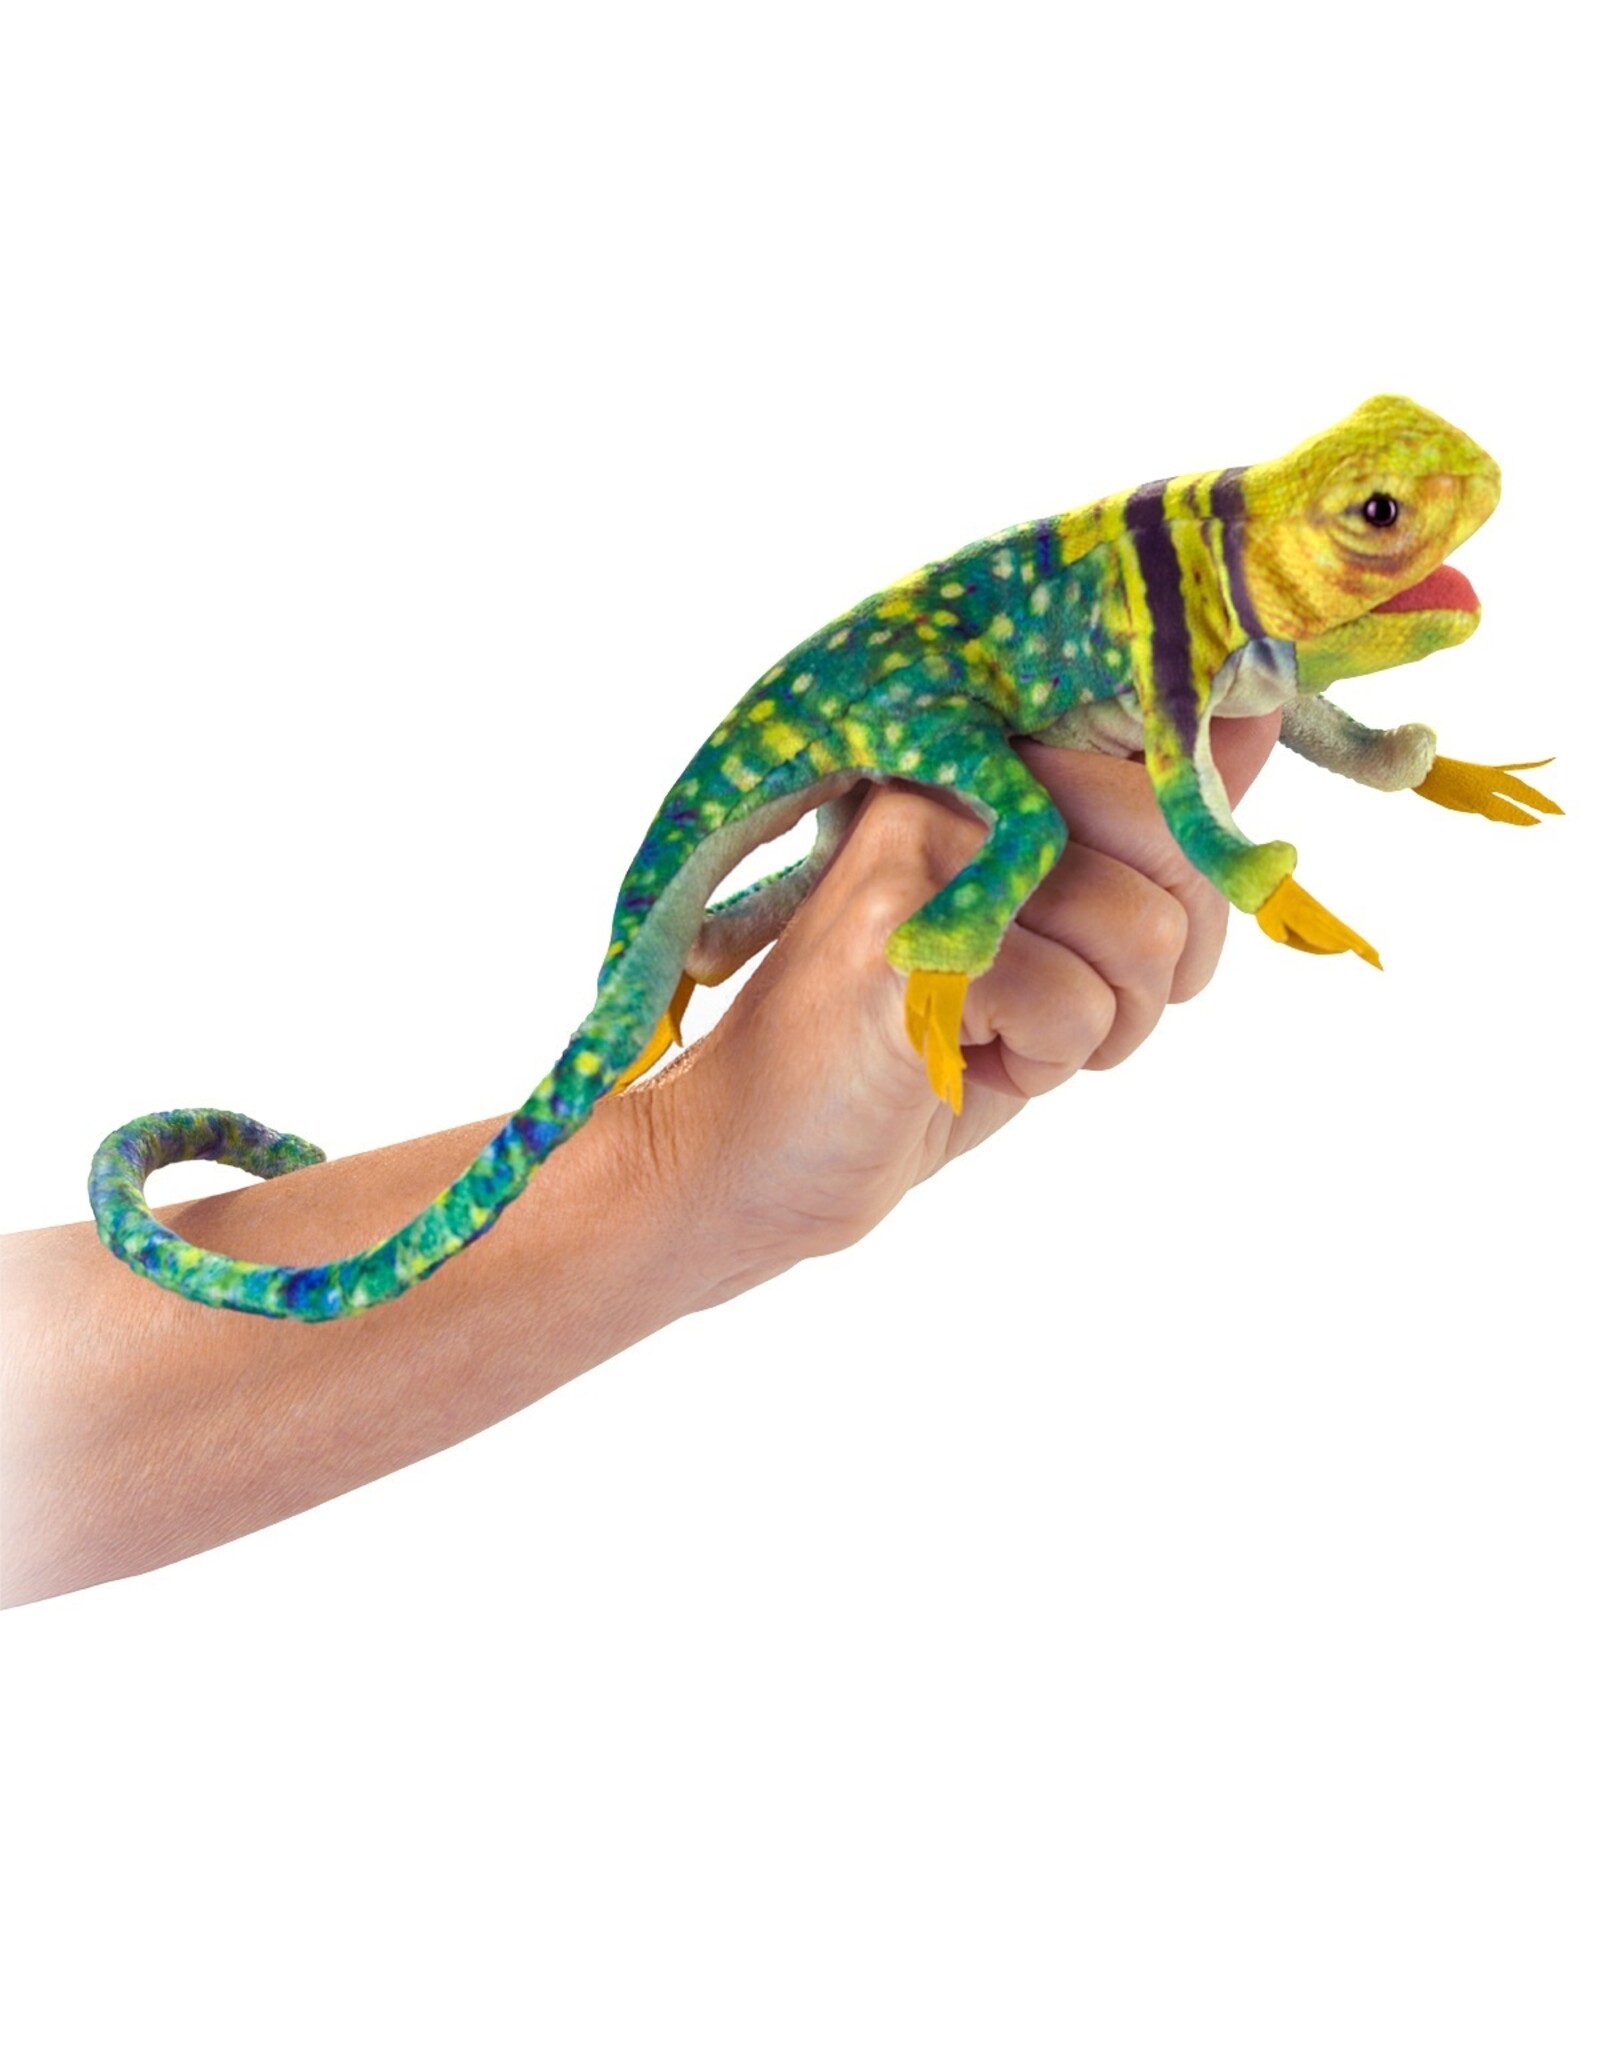 Folkmanis Puppets Mini Collared Lizard Finger Puppet